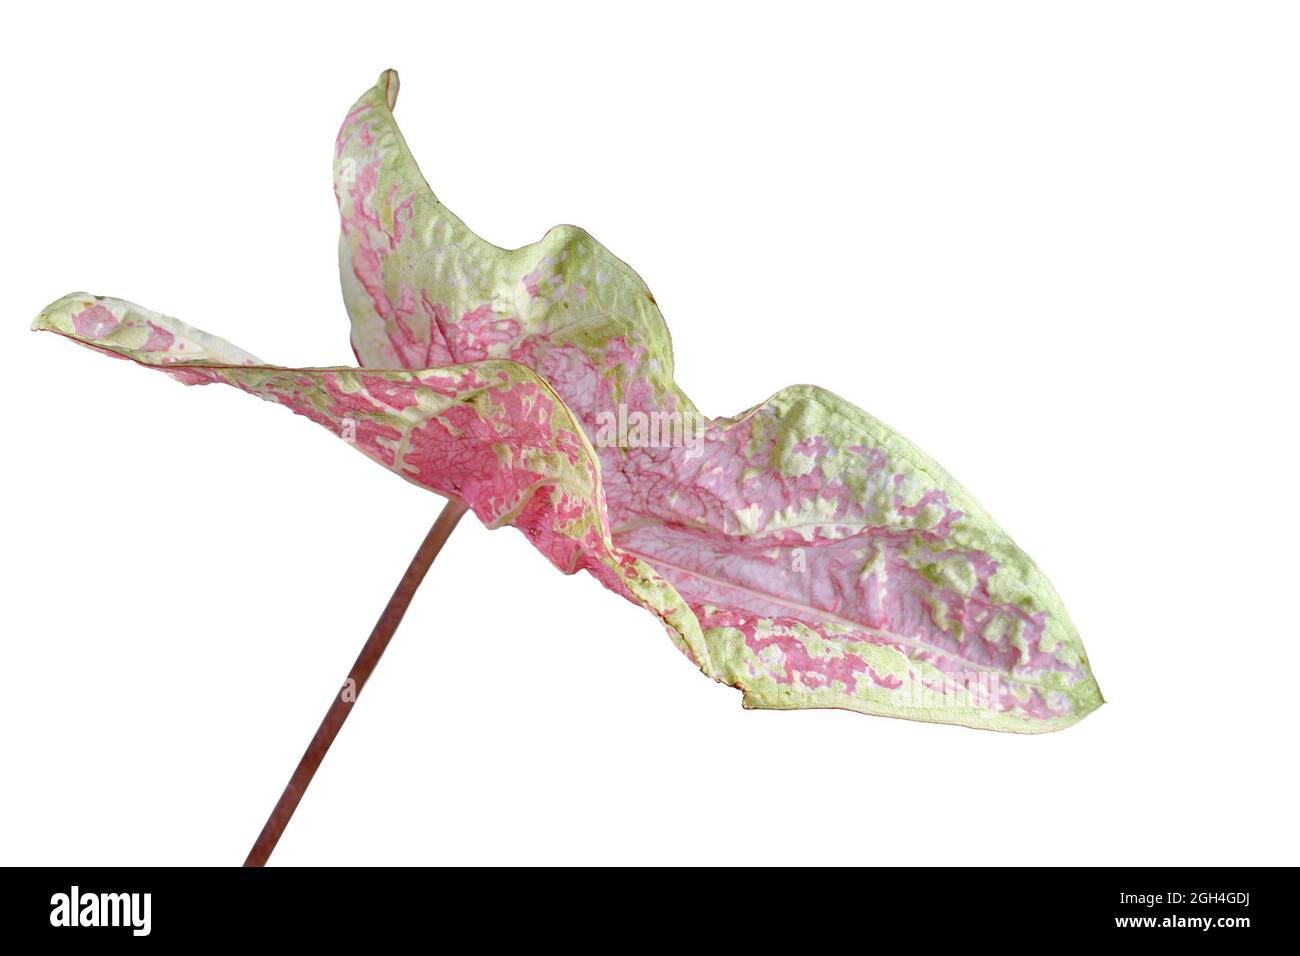 Curios foglia di un rosa e giallo traslucido esotico 'Caladium Seafoam Pink' casalinga su sfondo bianco Foto Stock